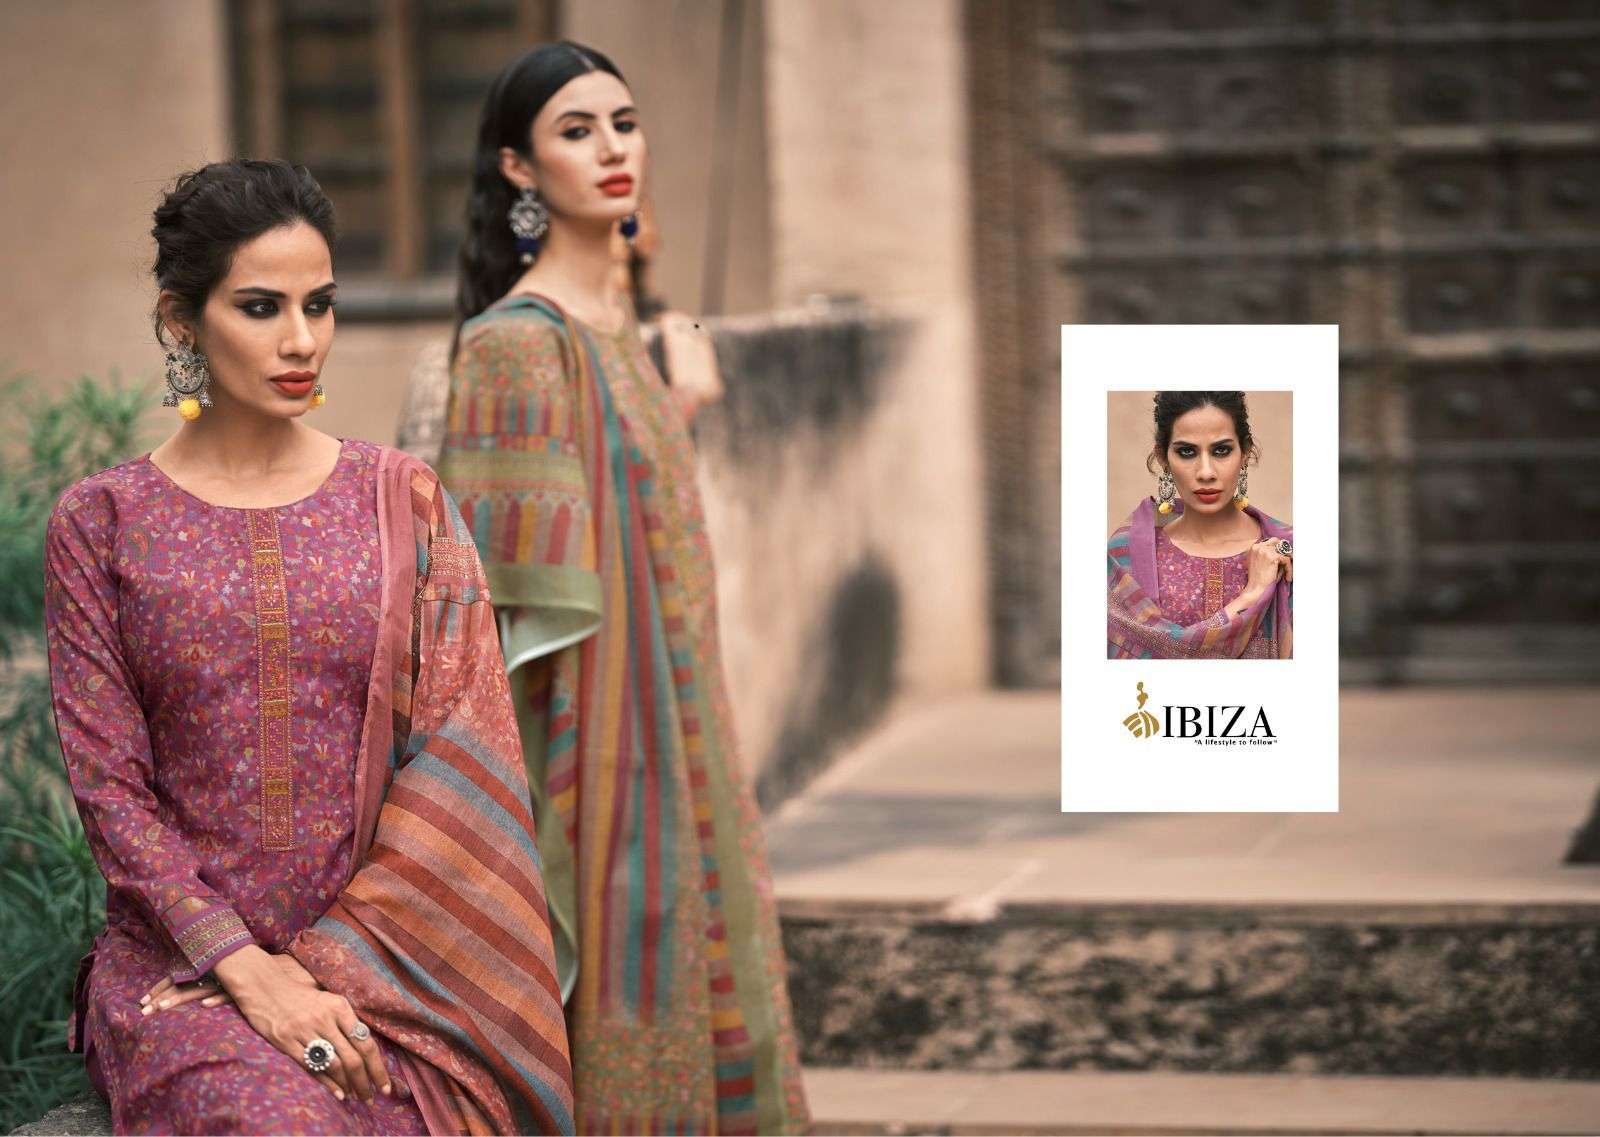 ibiza dilbar 10339-10346 series stylish designer lawn cotton designer salwar suits catalogue wholesaler surat 